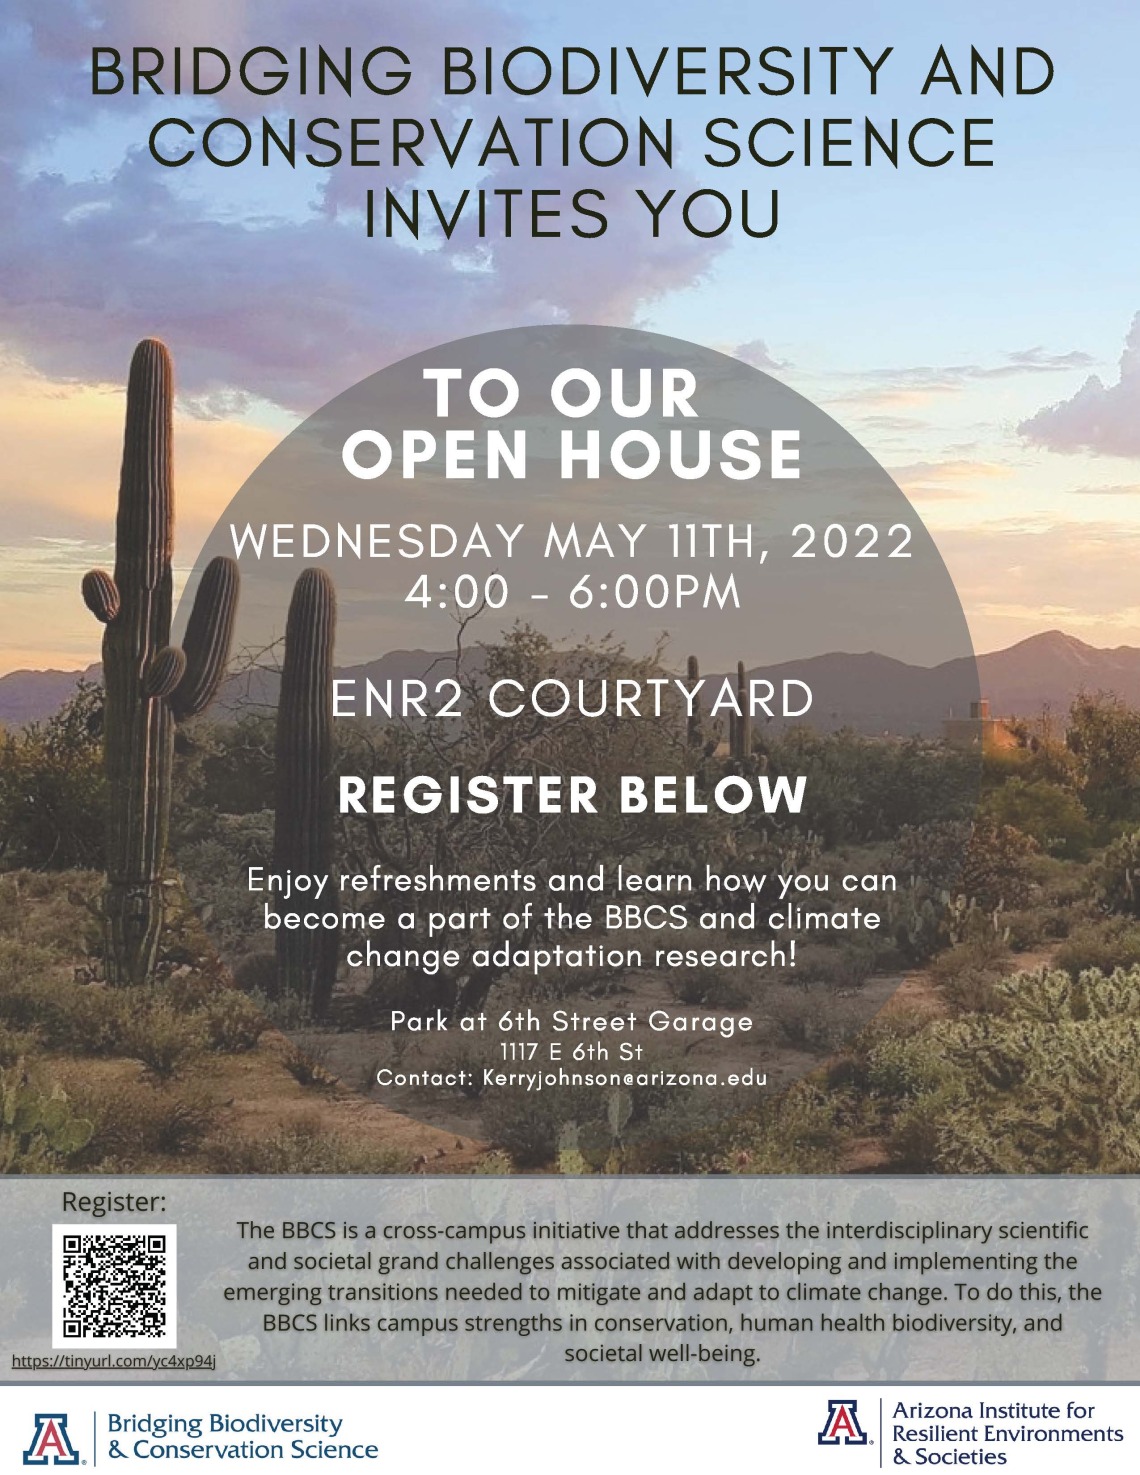 Open House Flyer